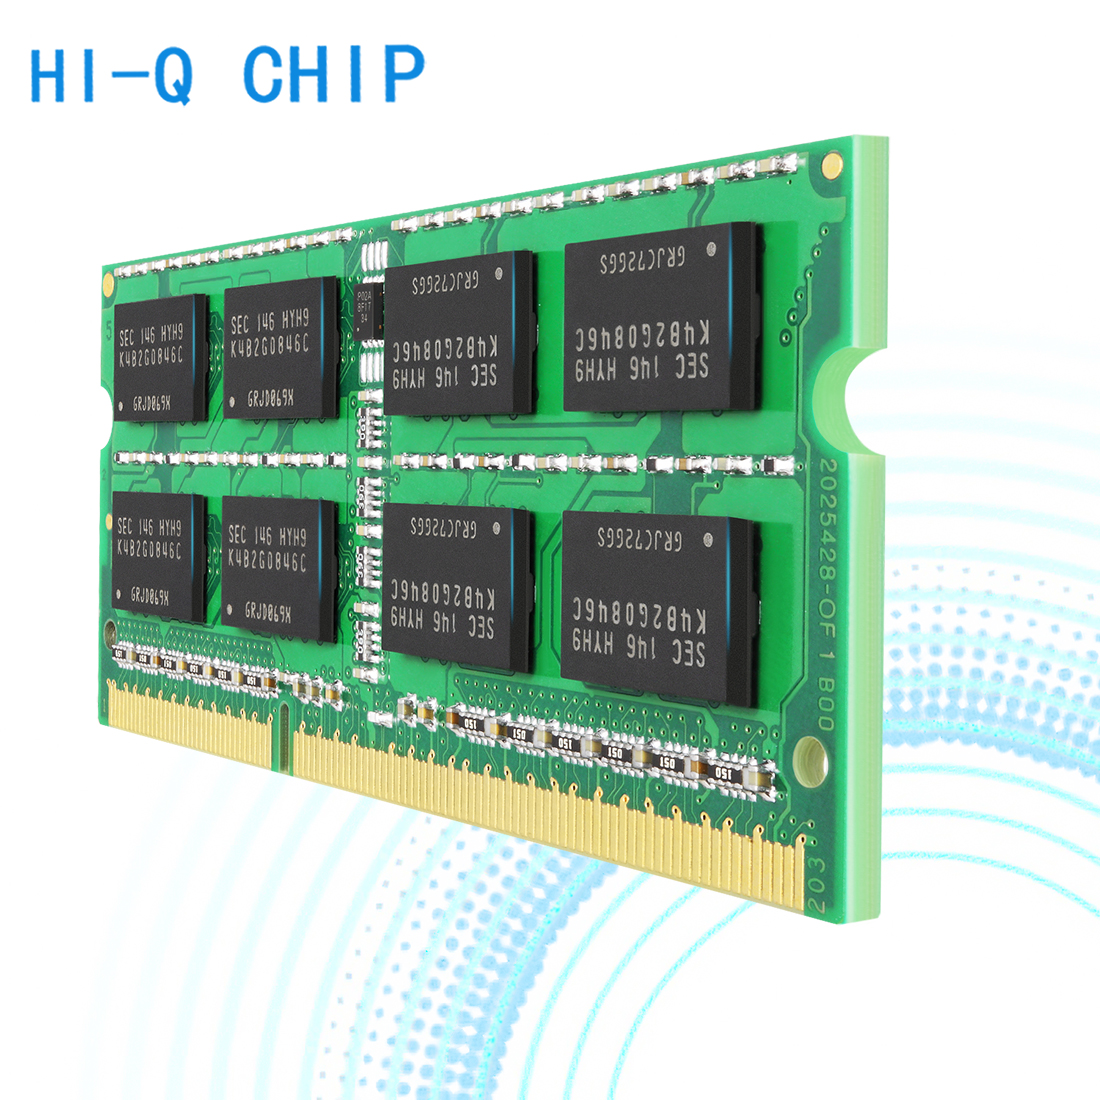 4GB DDR3 RAM PC3L 12800S 1600MHZ SODIMM Laptop Ram Manufacturers, 4GB DDR3 RAM PC3L 12800S 1600MHZ SODIMM Laptop Ram Factory, Supply 4GB DDR3 RAM PC3L 12800S 1600MHZ SODIMM Laptop Ram